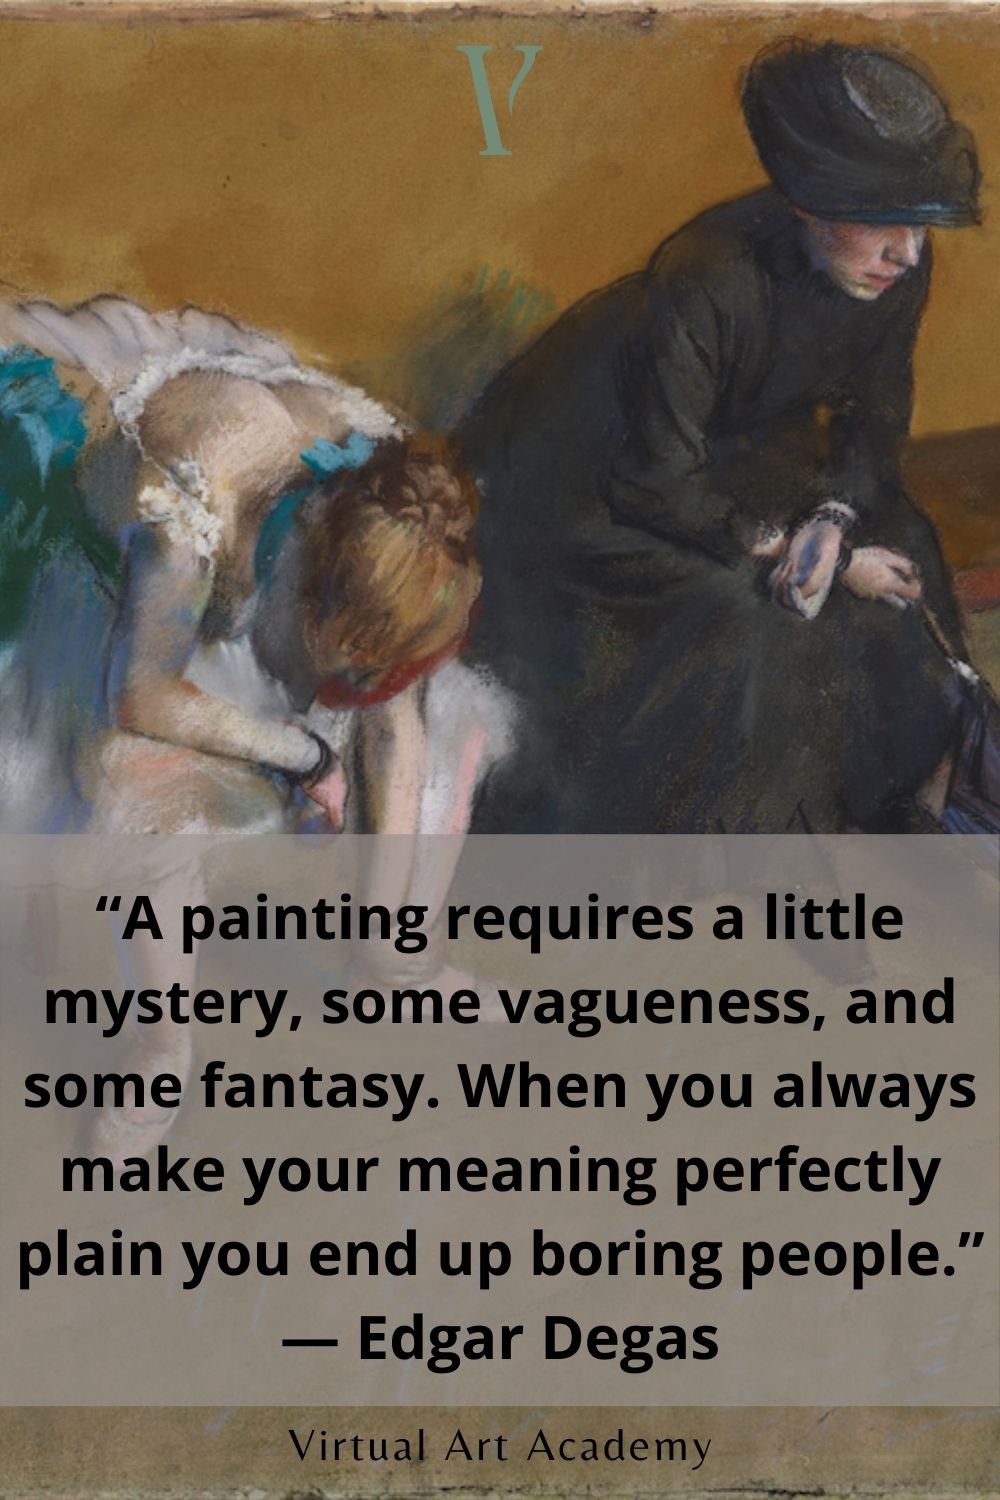 Edgar Degas Quote - Inspirational